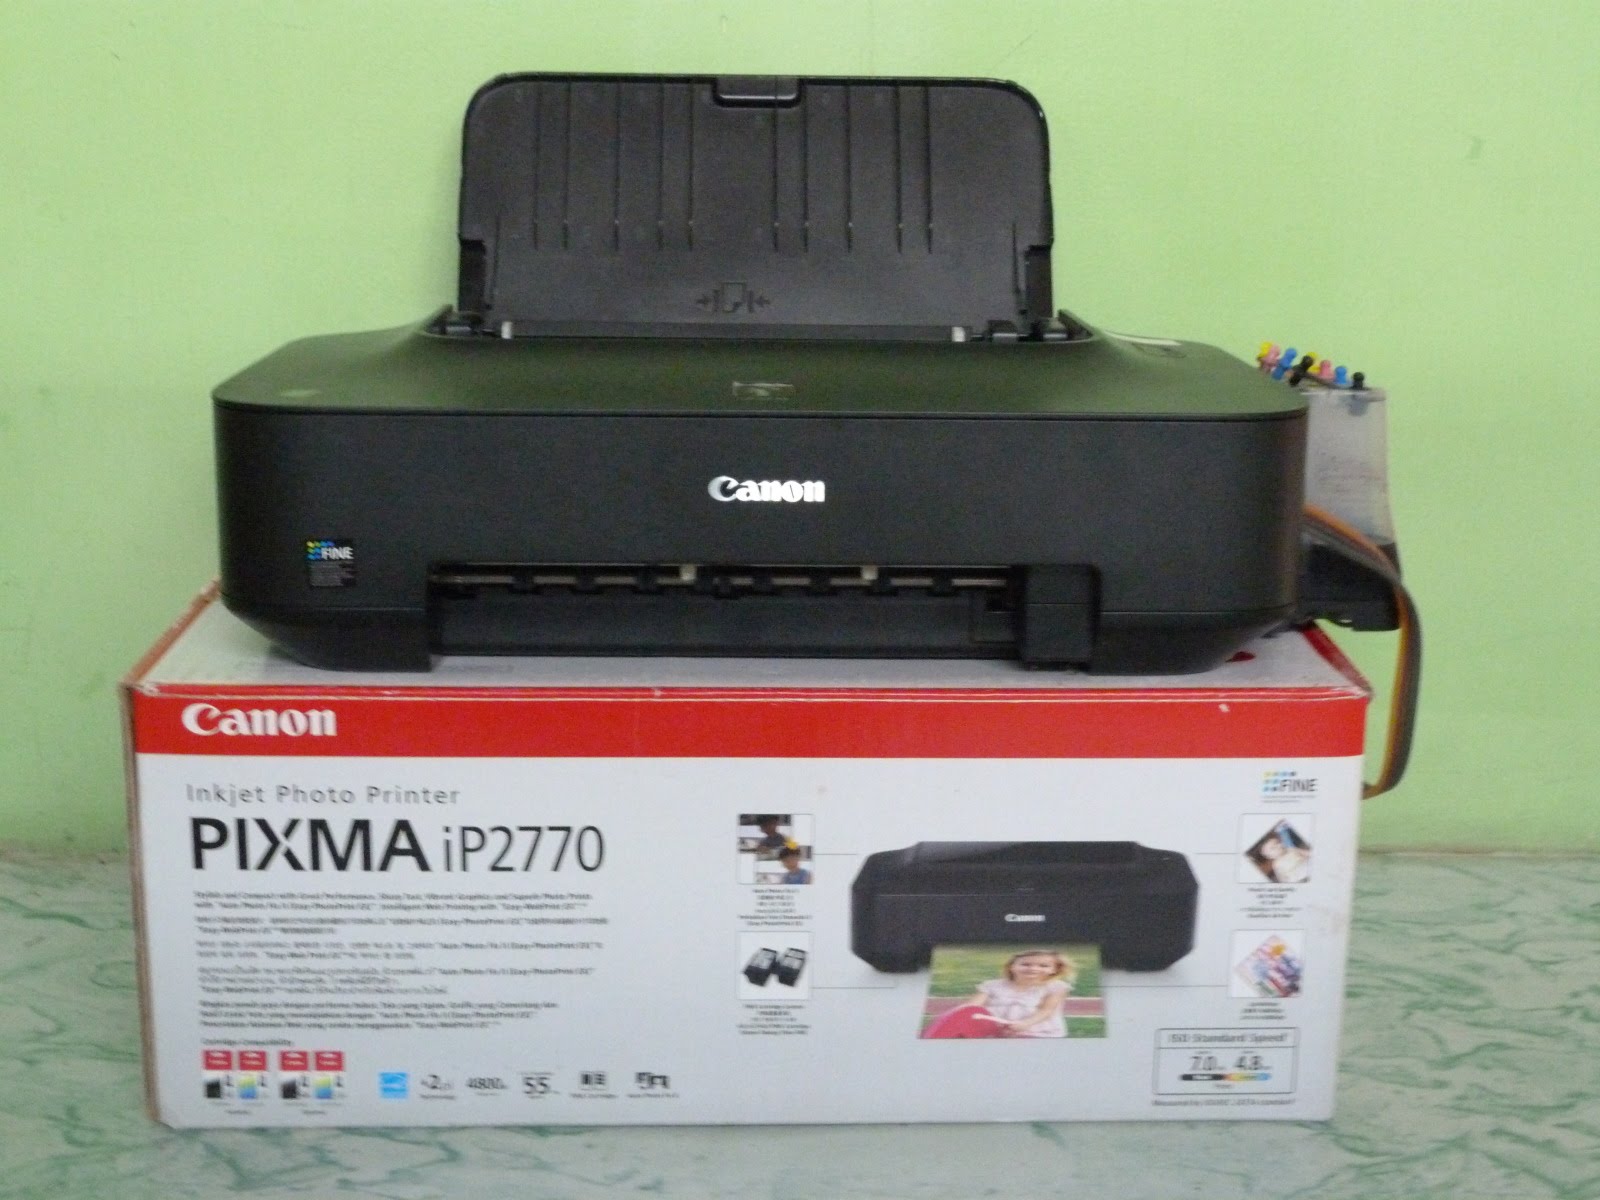 Cara Instal Printer Canon Pixma ip2770 Lengkap dengan